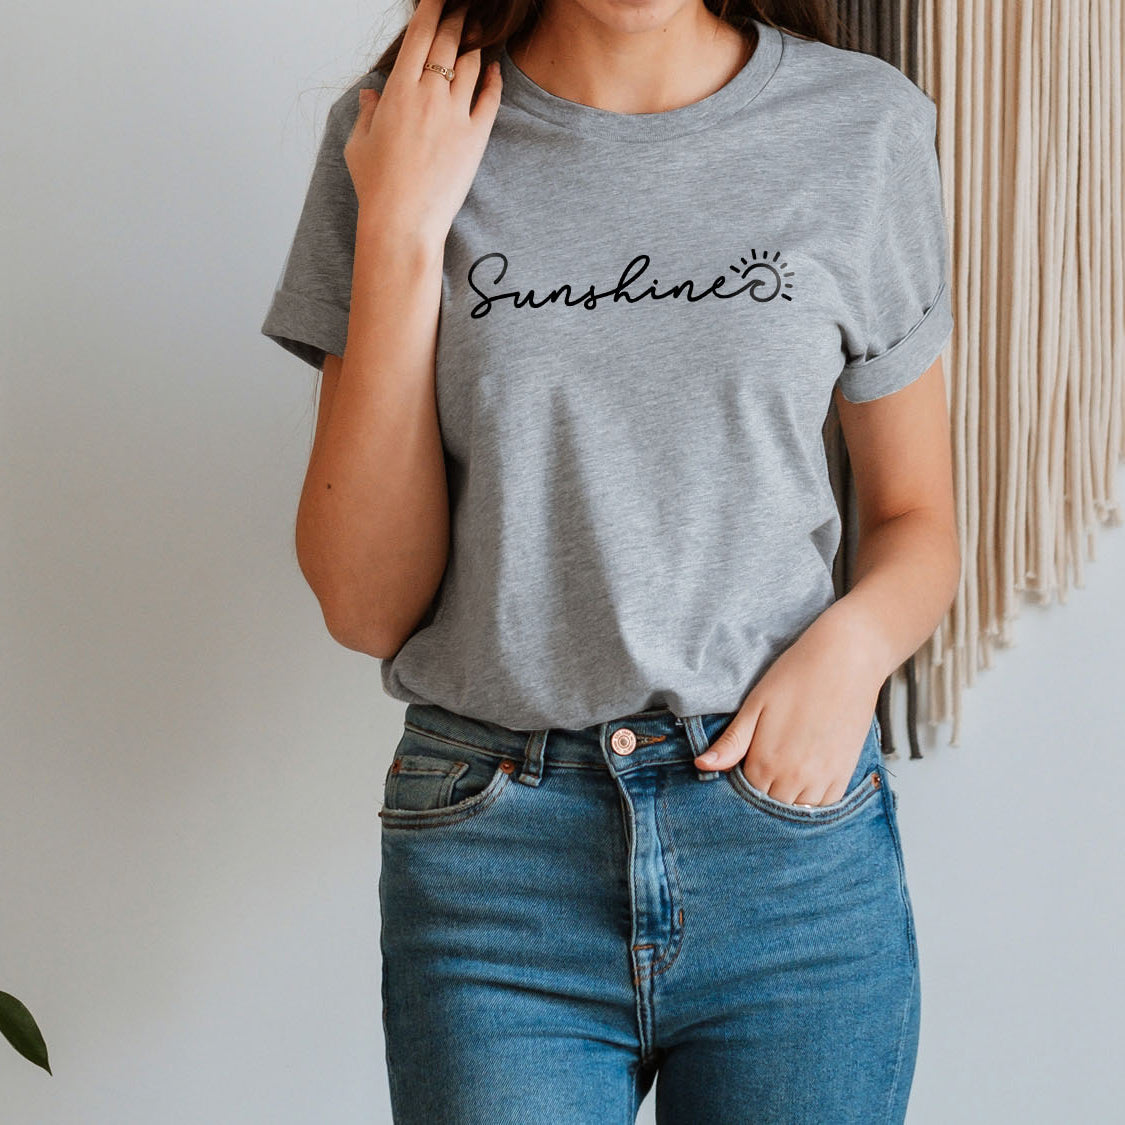 Sunshine T-shirt - Beach Vibes California State Minimal Design Printed Tee Shirt